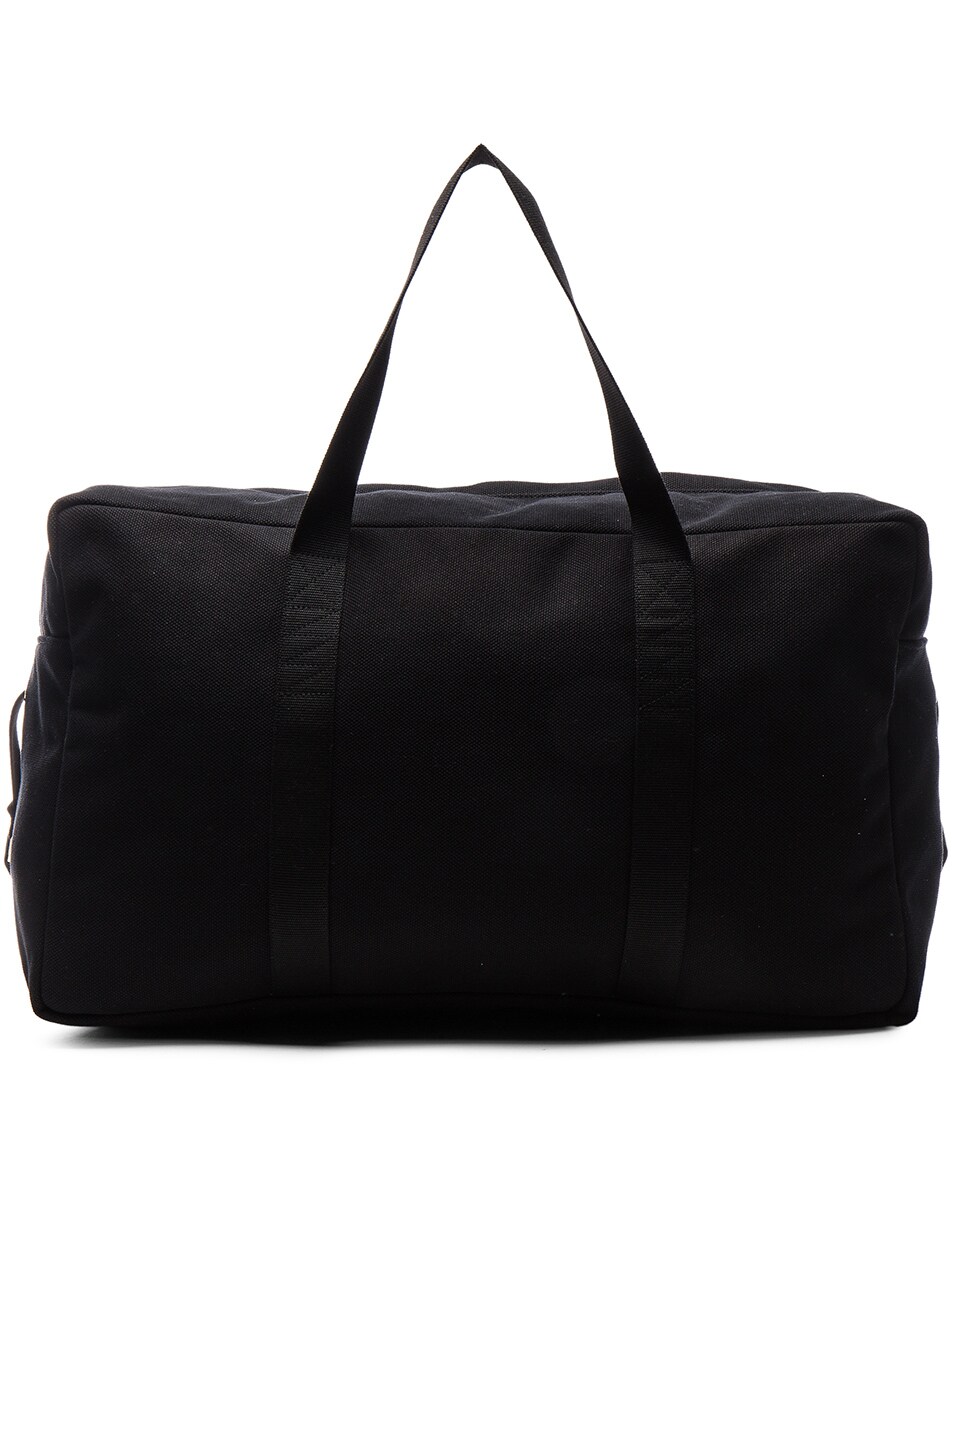 OFF-WHITE Duffle Bag in Black & White | FWRD